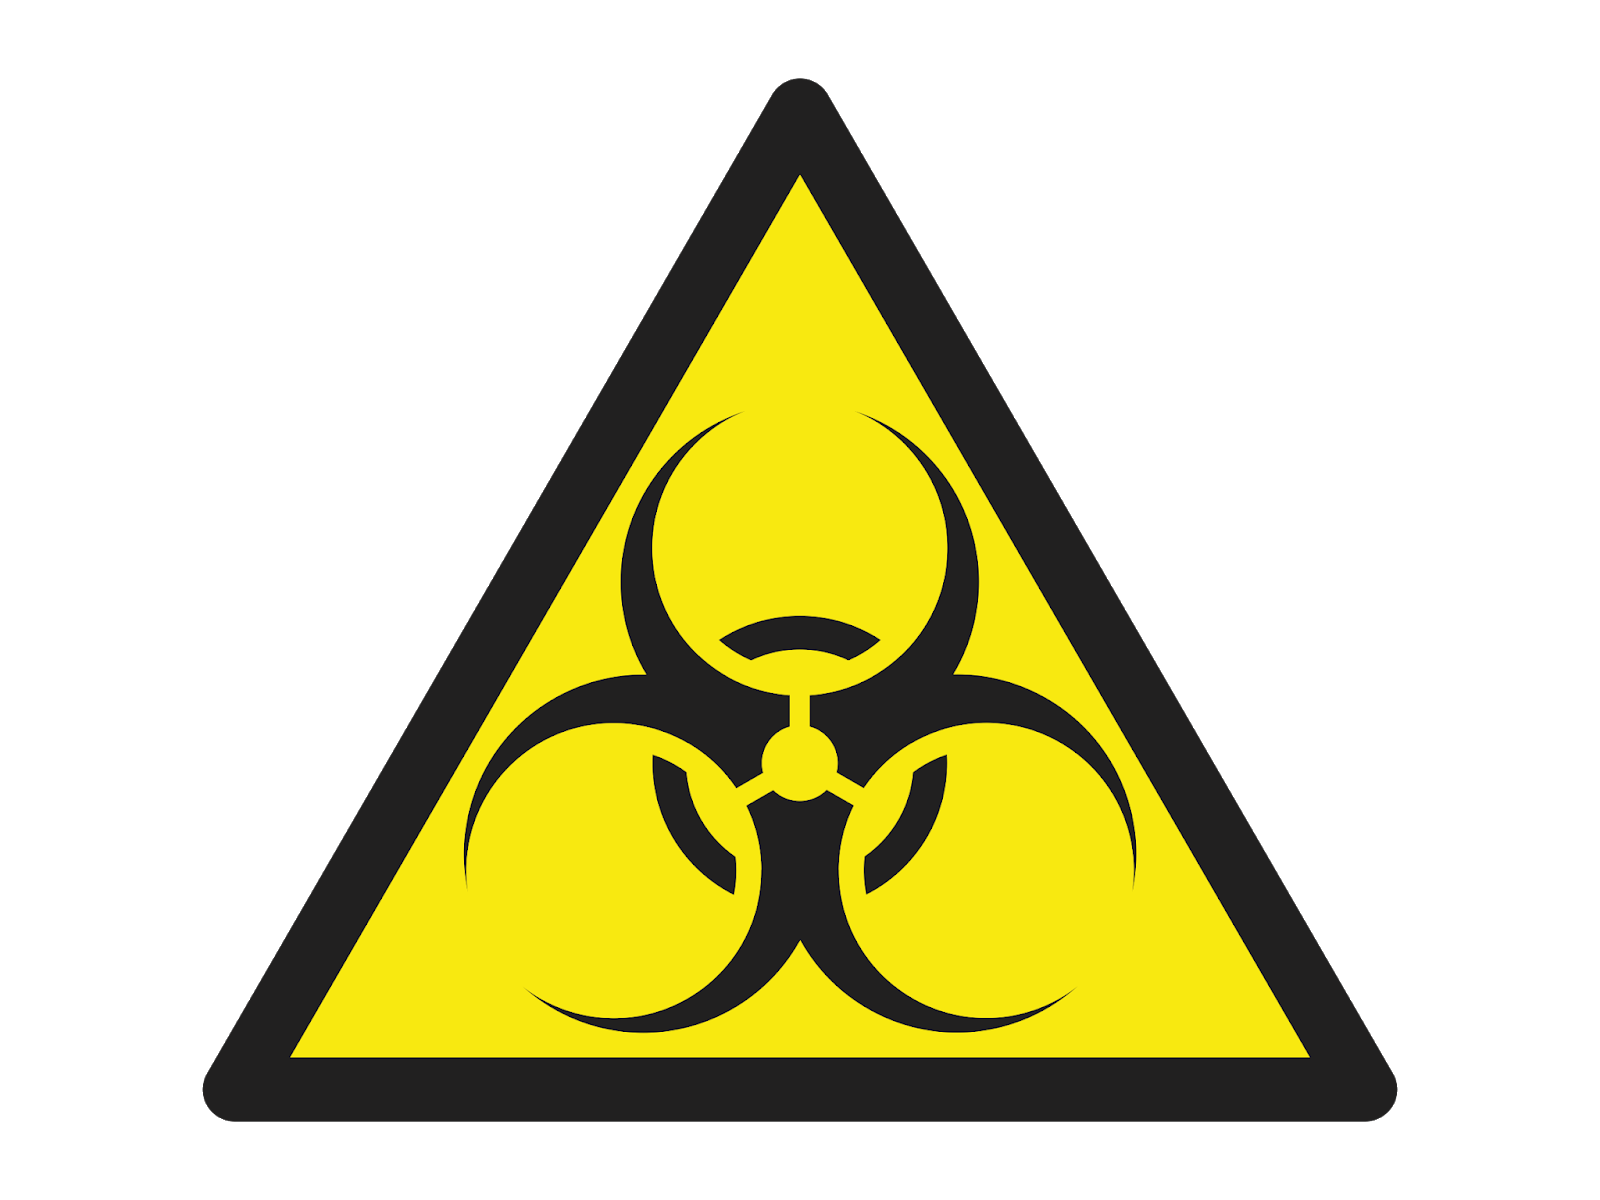 Biohazard перевод. Знак биологической опасности. Значок химической опасности. Осторожно биологическая опасность. Пиктограмма биологическая опасность.